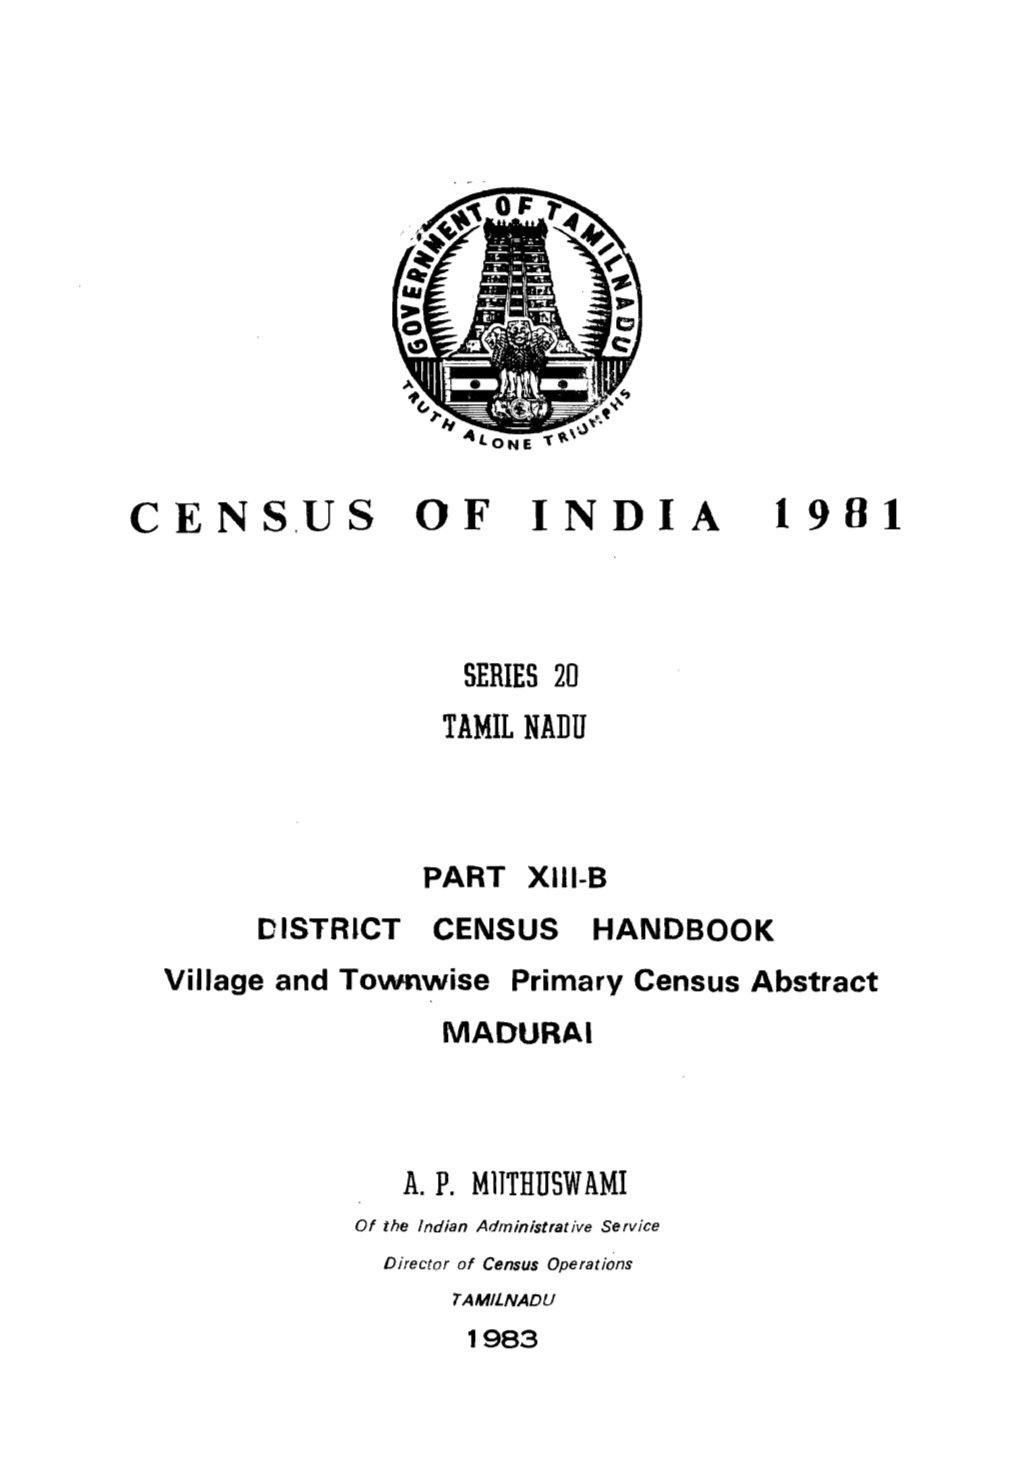 District Census Handbook, Madurai, Part XIII-B, Series-20